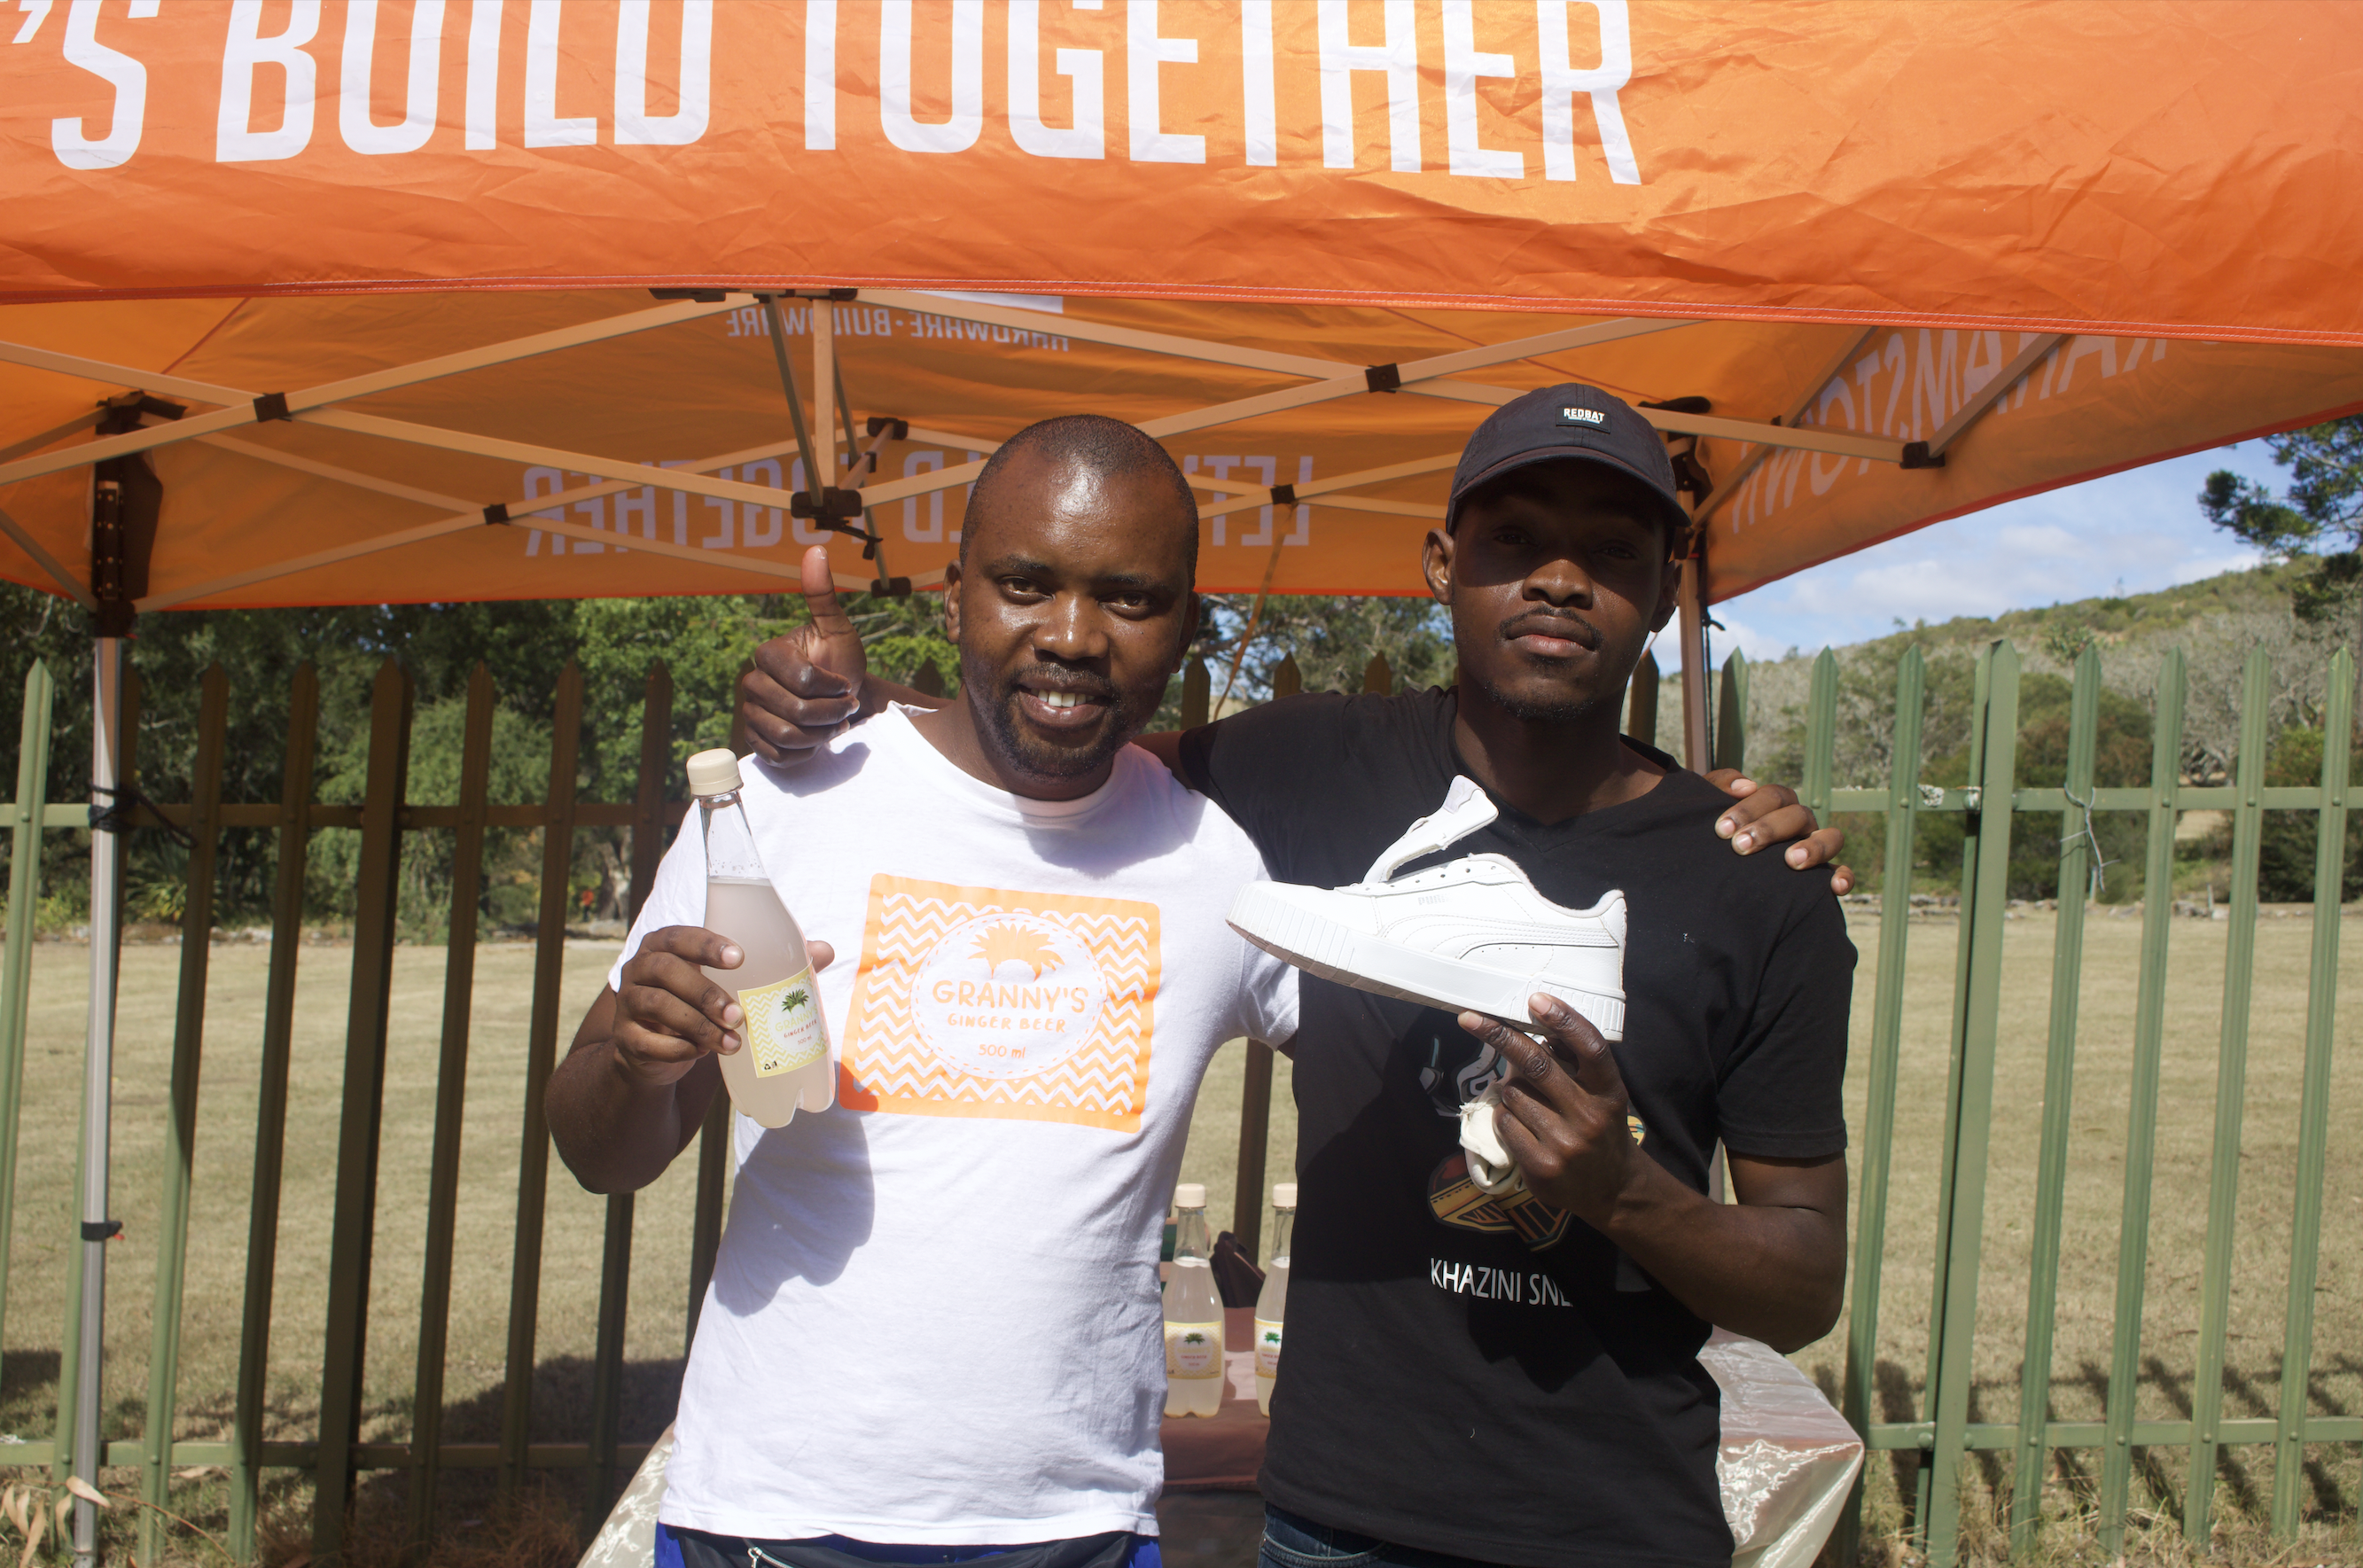 Granny's Ginger Beer owner Malwande Bebeza (left) and Khazini Sneakers owner, Aphelele "Percy" Ngemntu. Photo: Linda Pona